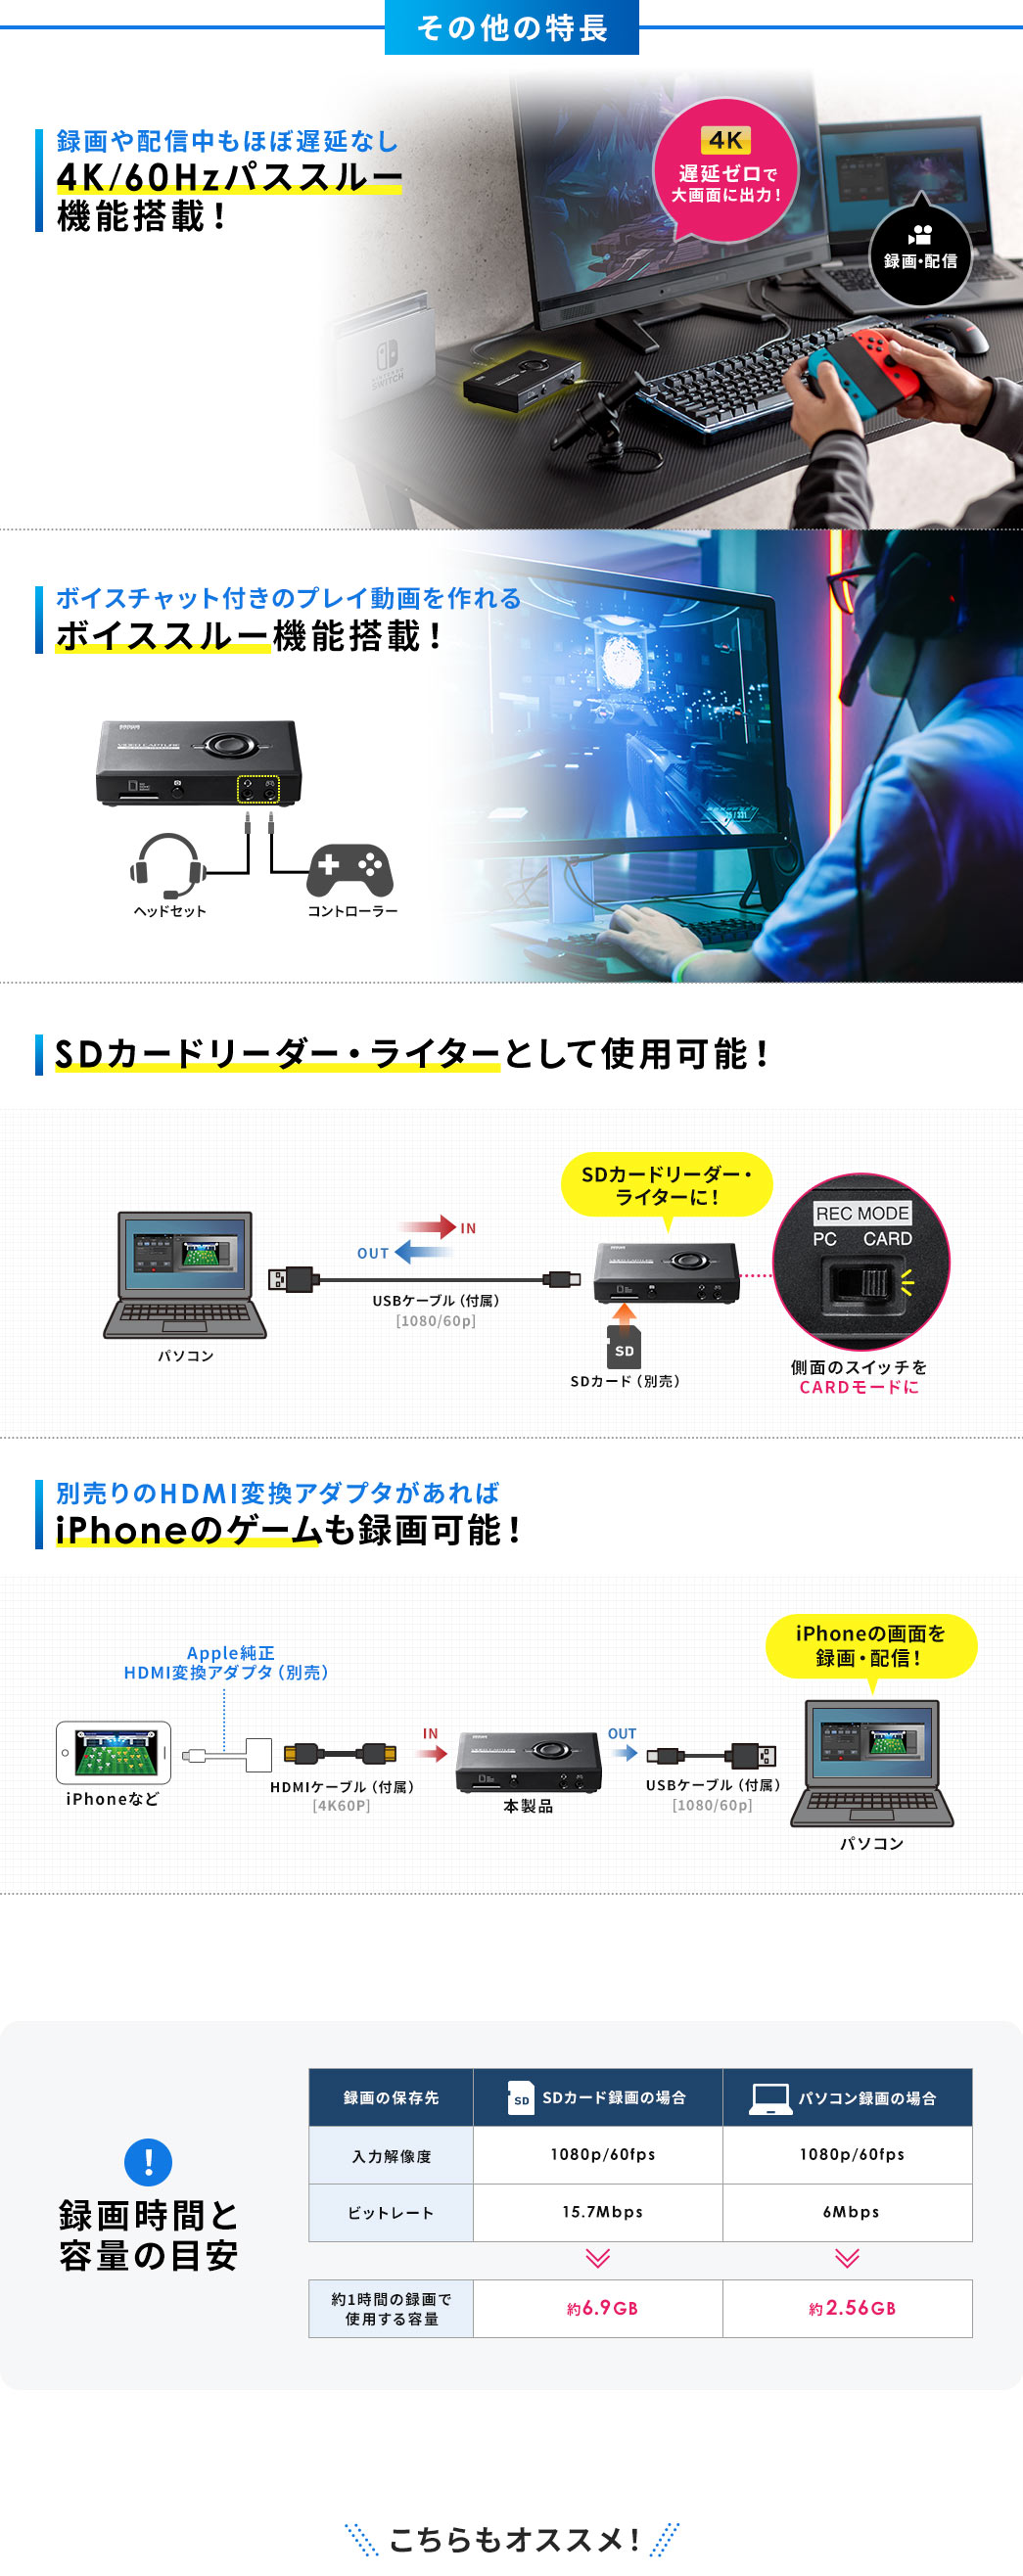 4K/60Hzパススルー機能搭載 ボイススルー機能搭載 SDカードリーダー・ライターとして使用可能 iPhoneのゲームも録画可能